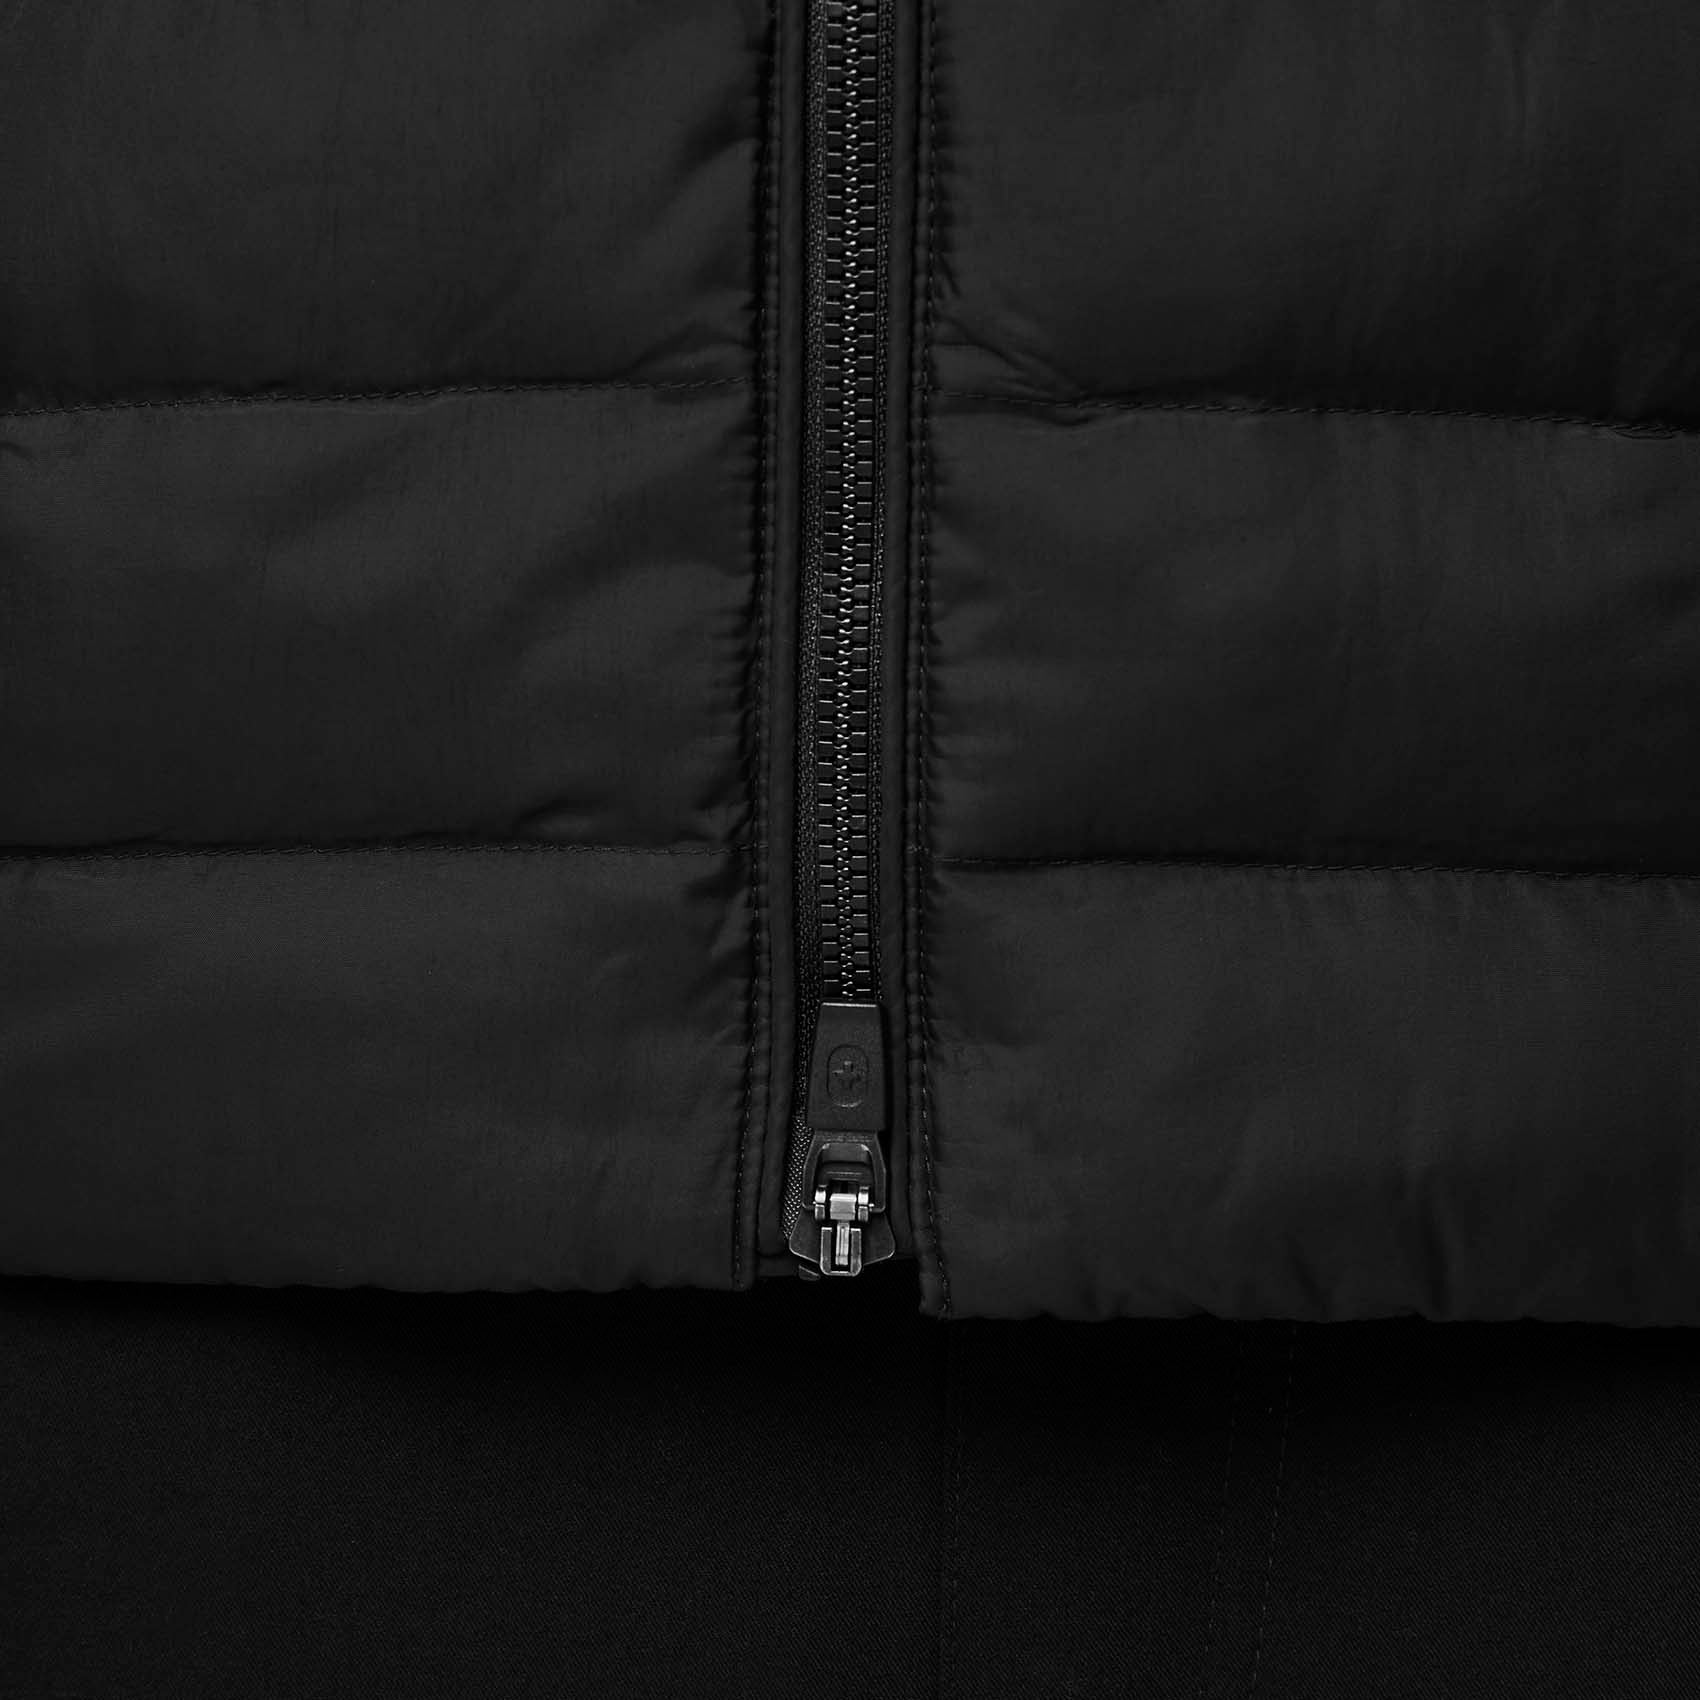 Figs Men’s On-Shift Packable Puffer Vest Black L